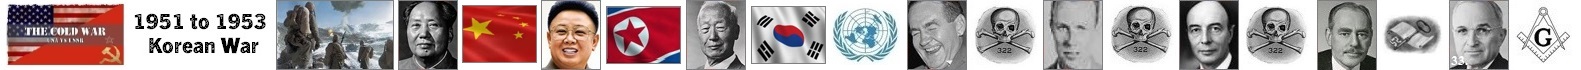 Korean War_thumb.jpg